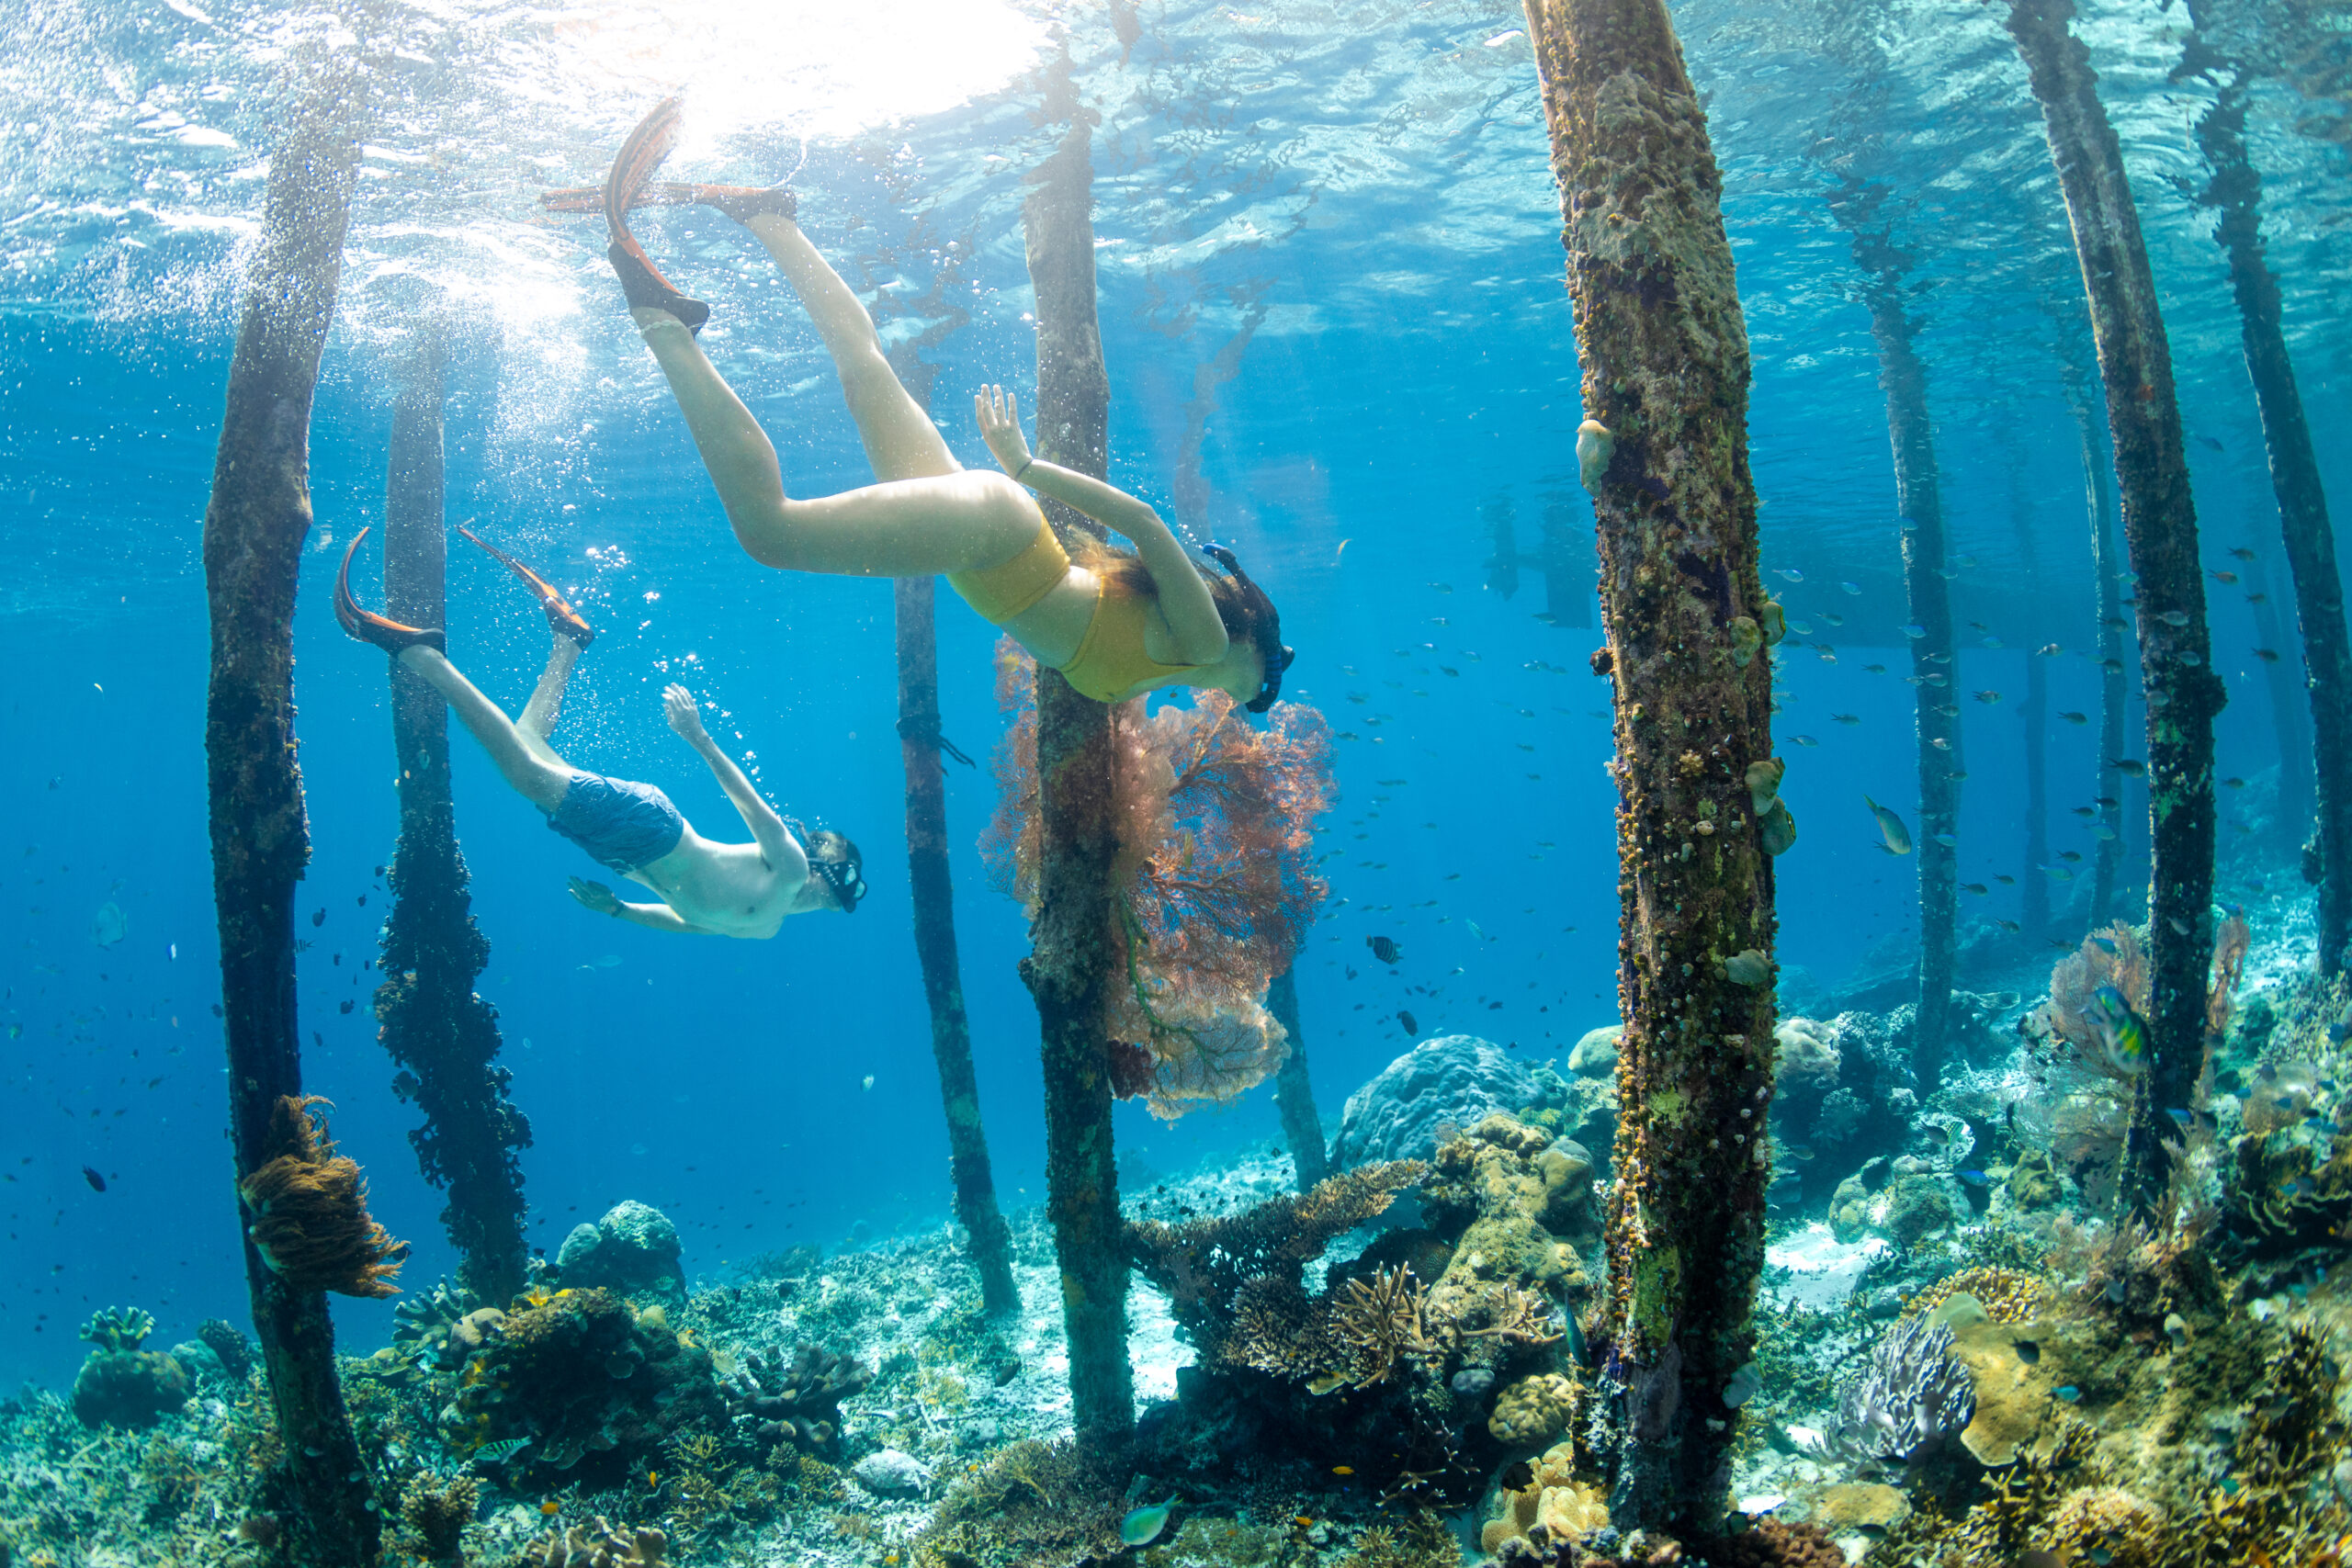 Underwater camera tips